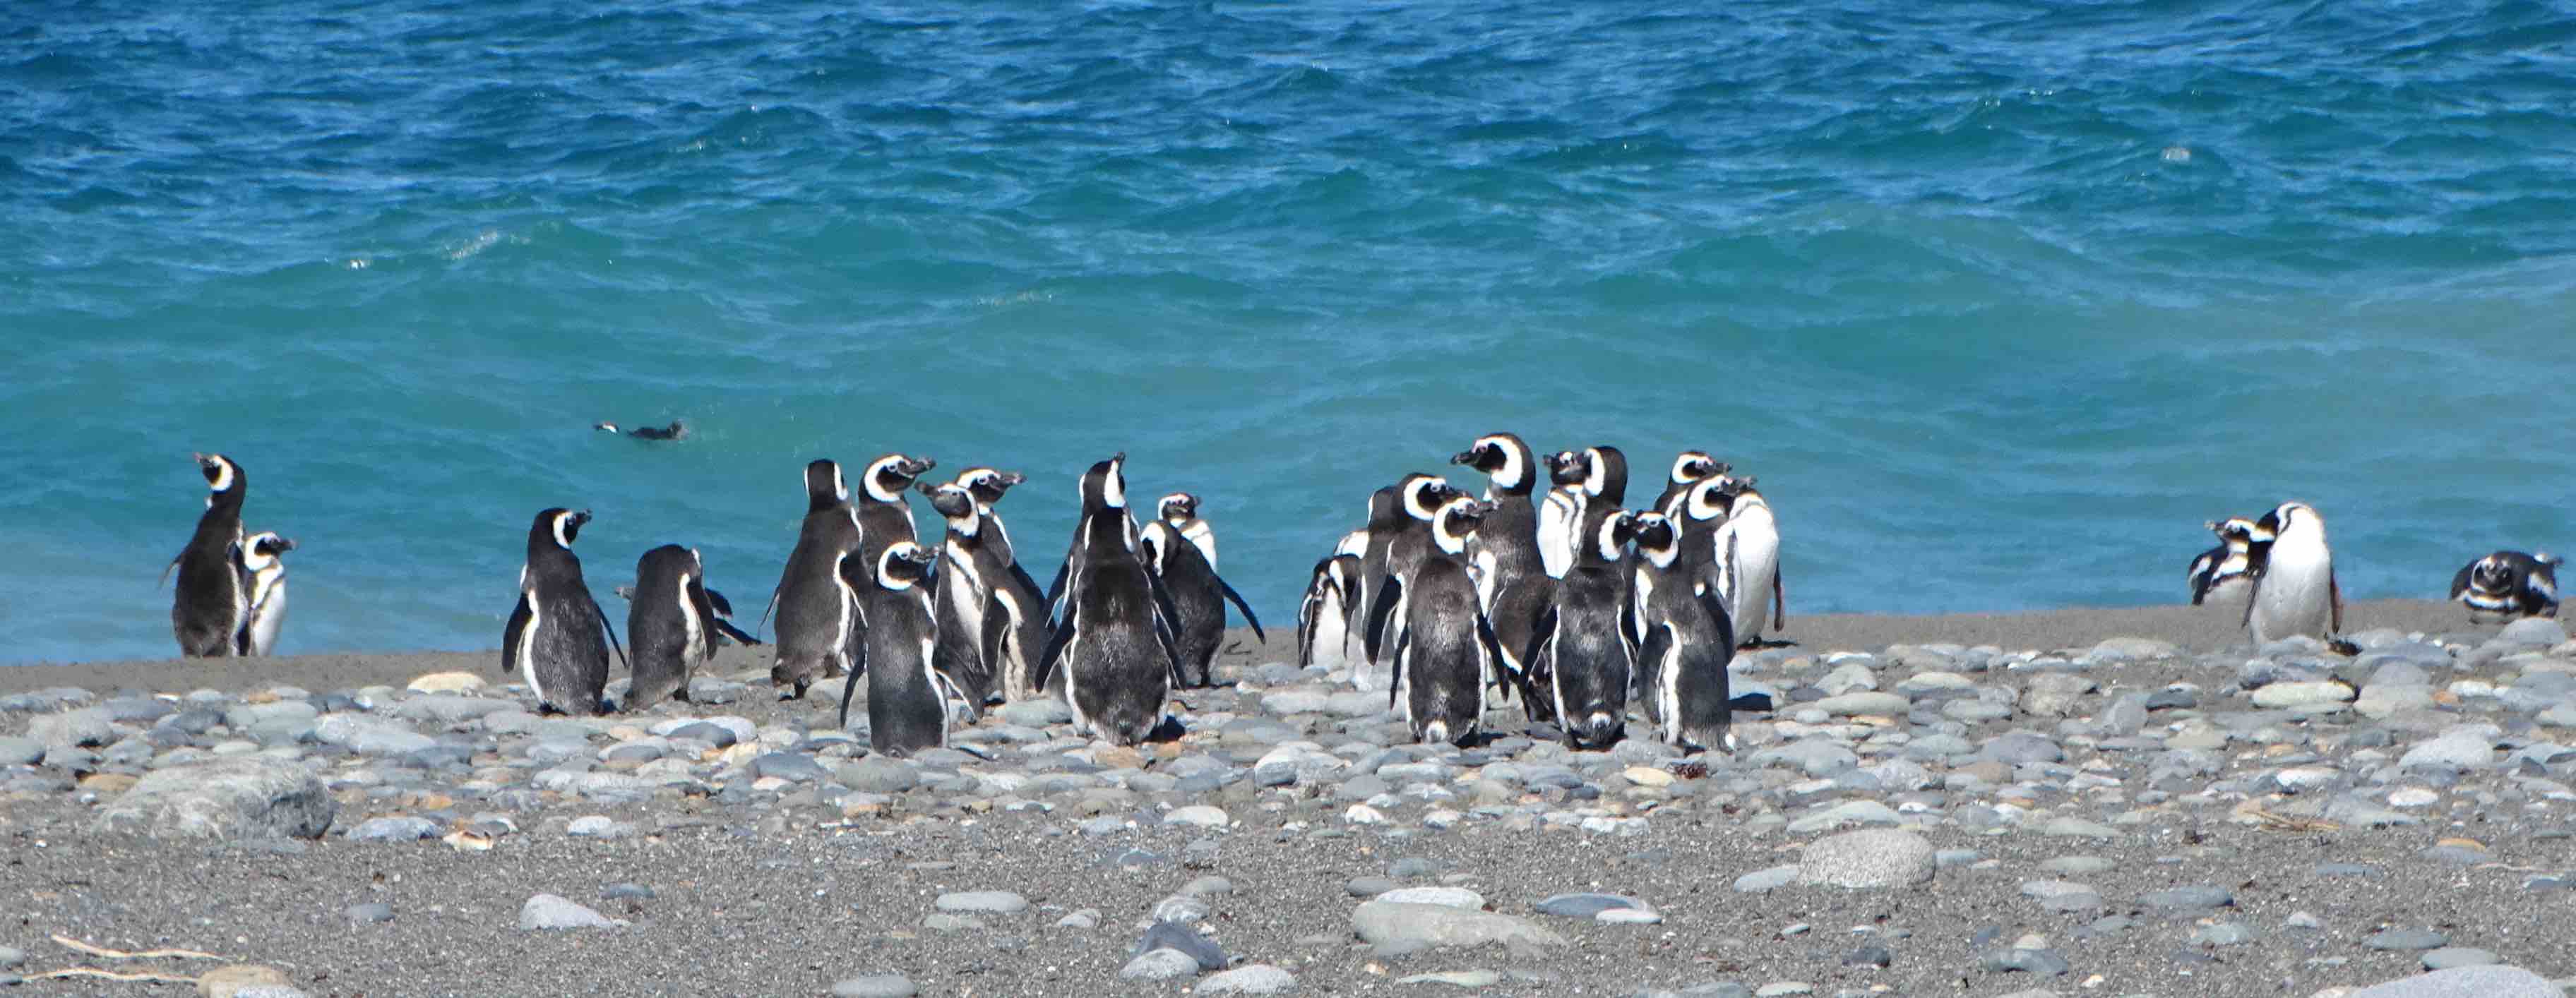 pinguinos5